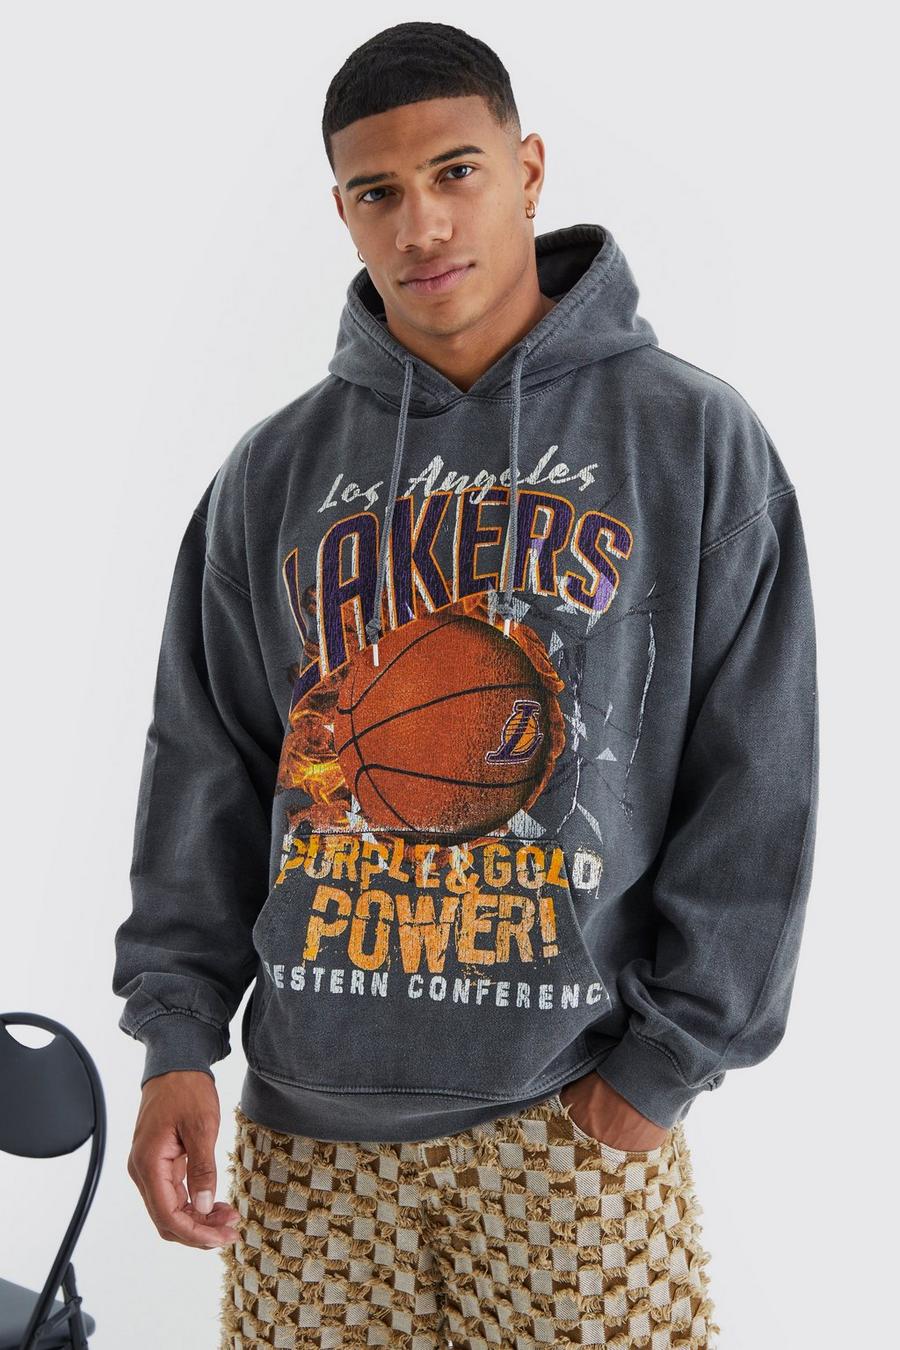 NBA Gear Los Angeles Lakers Performance Pullover Jersey Sweatshirt Sweater  Tee